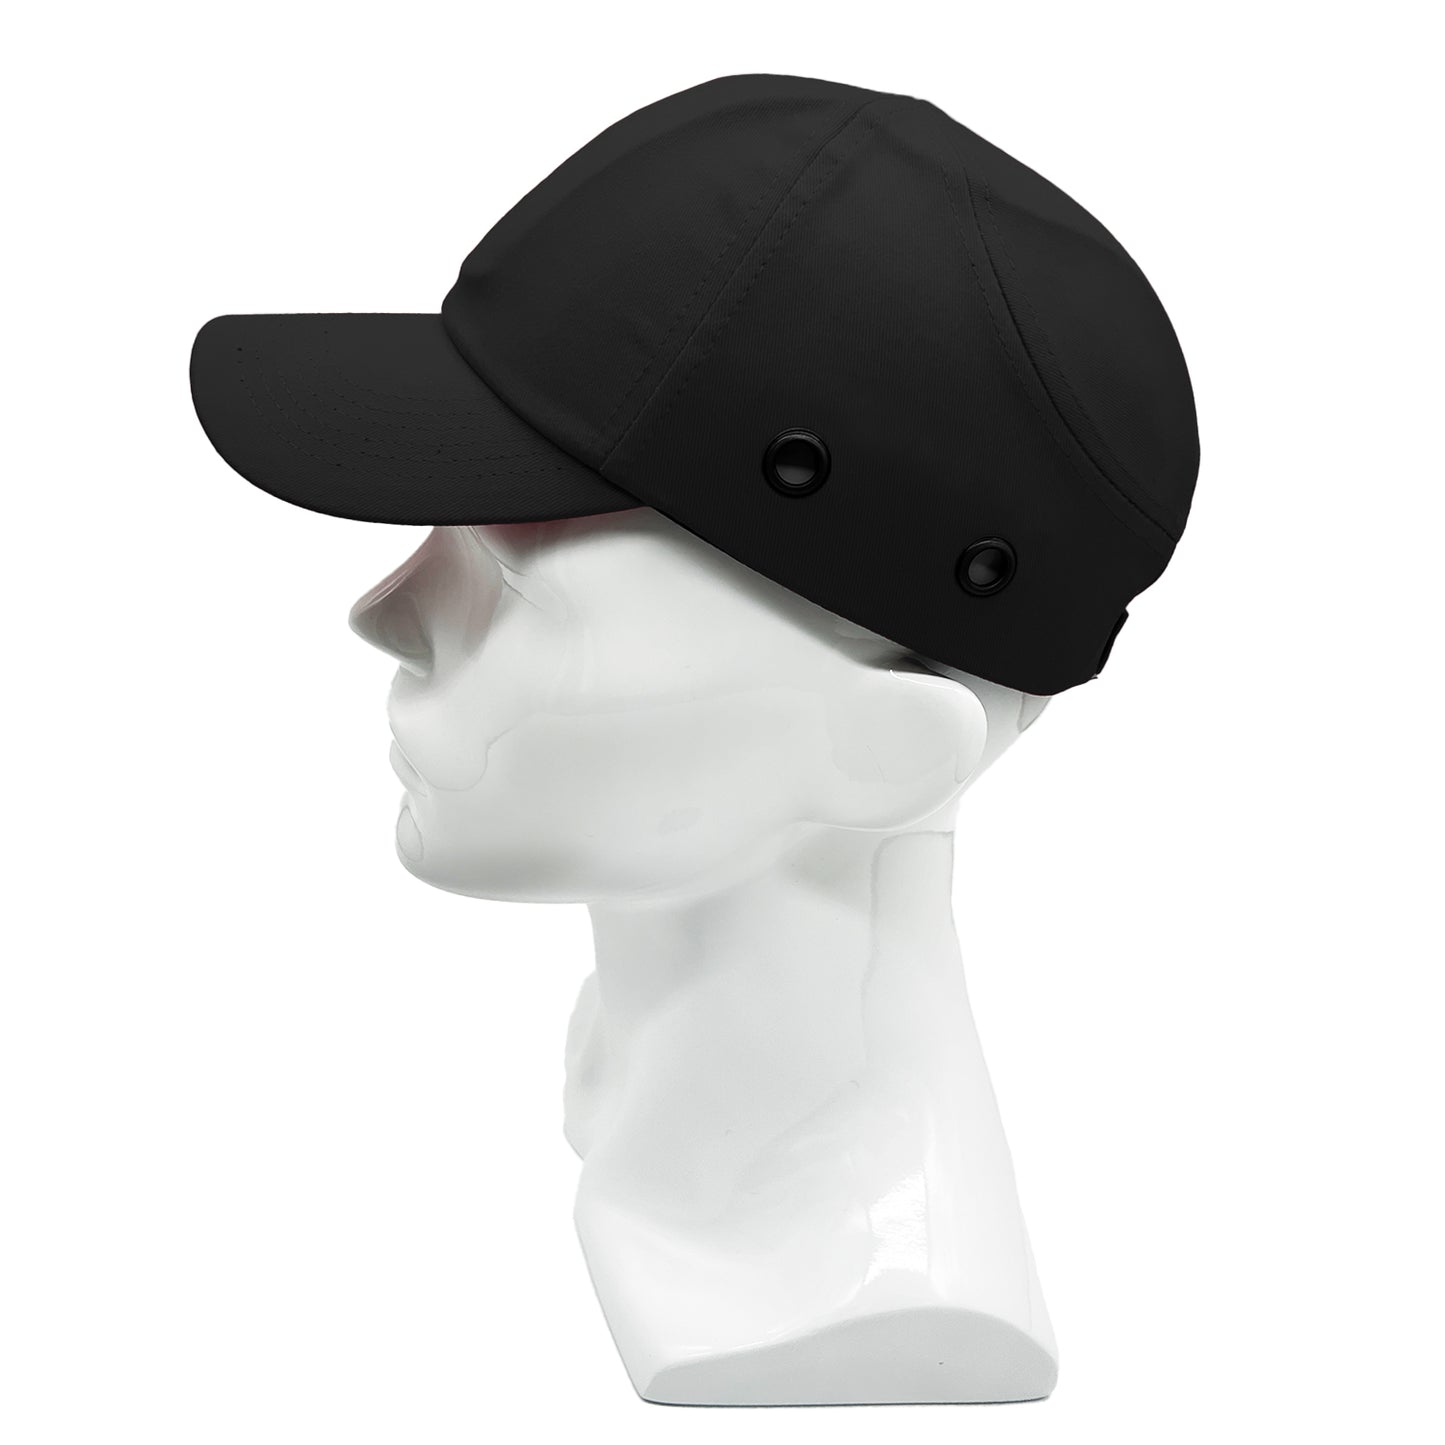 Value Bundles - Lucent Path Black Baseball Bump Caps + Flip Up Face Shield